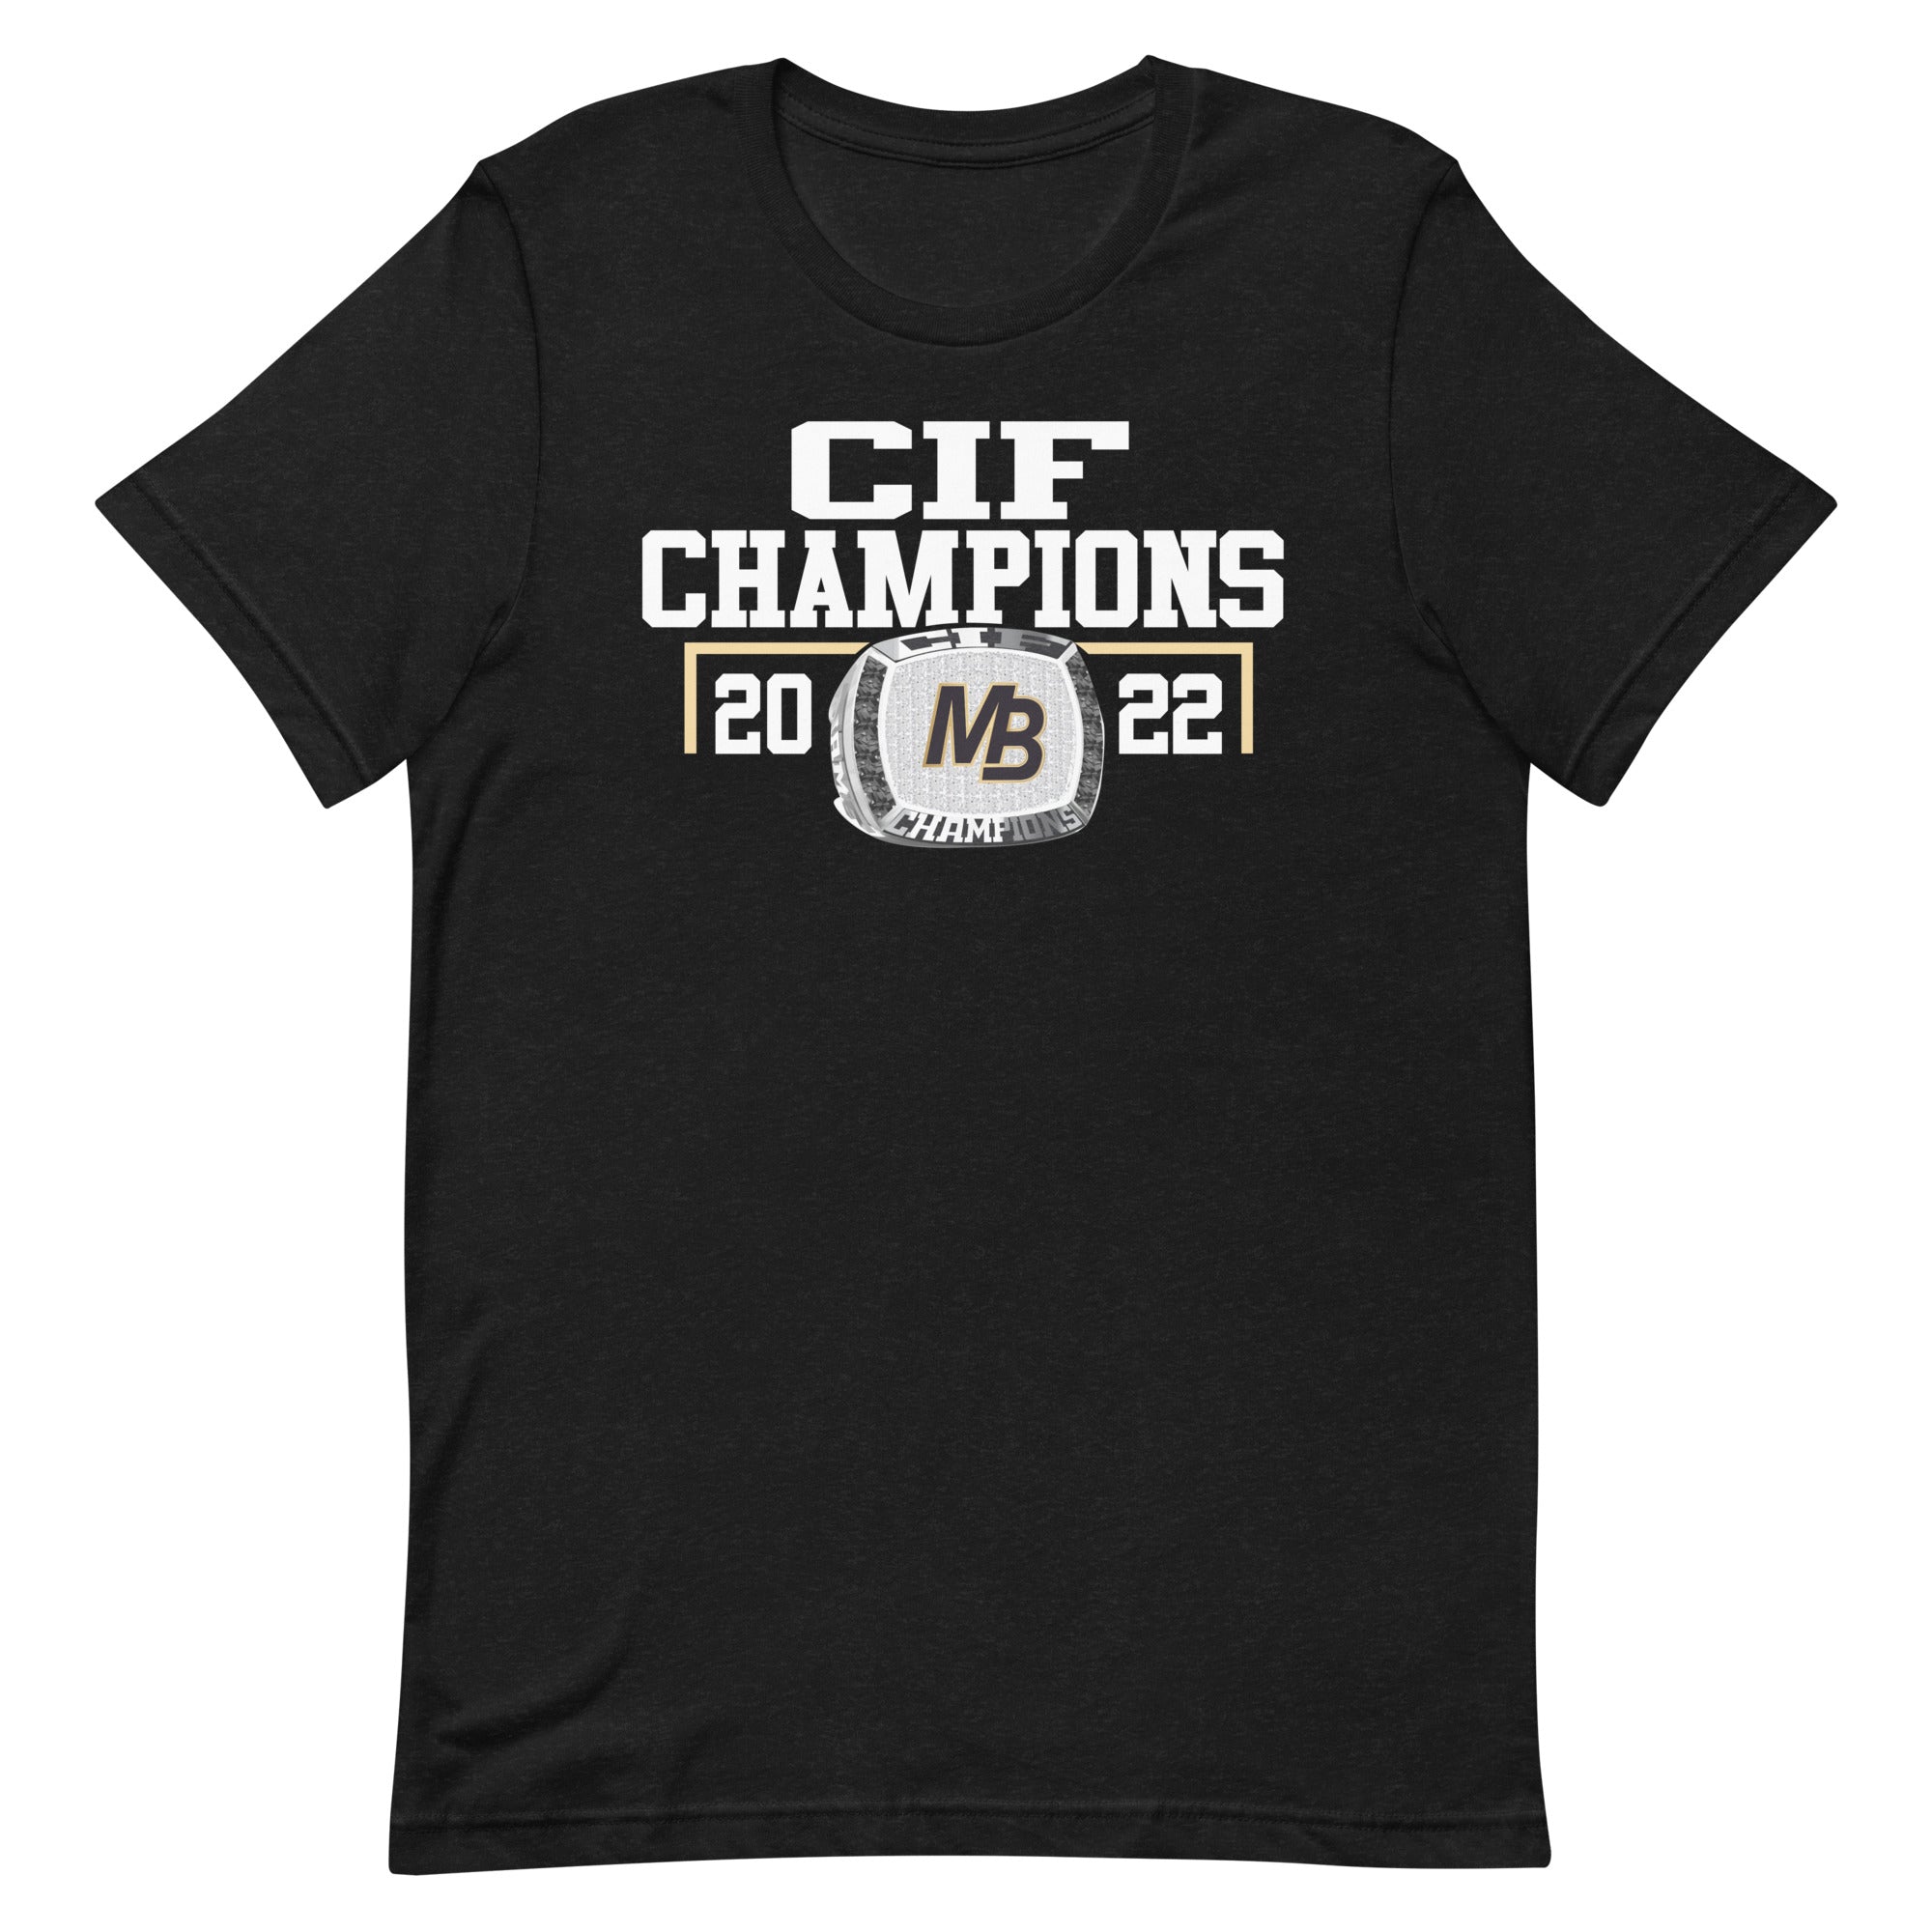 Mission Bay High School CIF Champions Unisex t-shirt